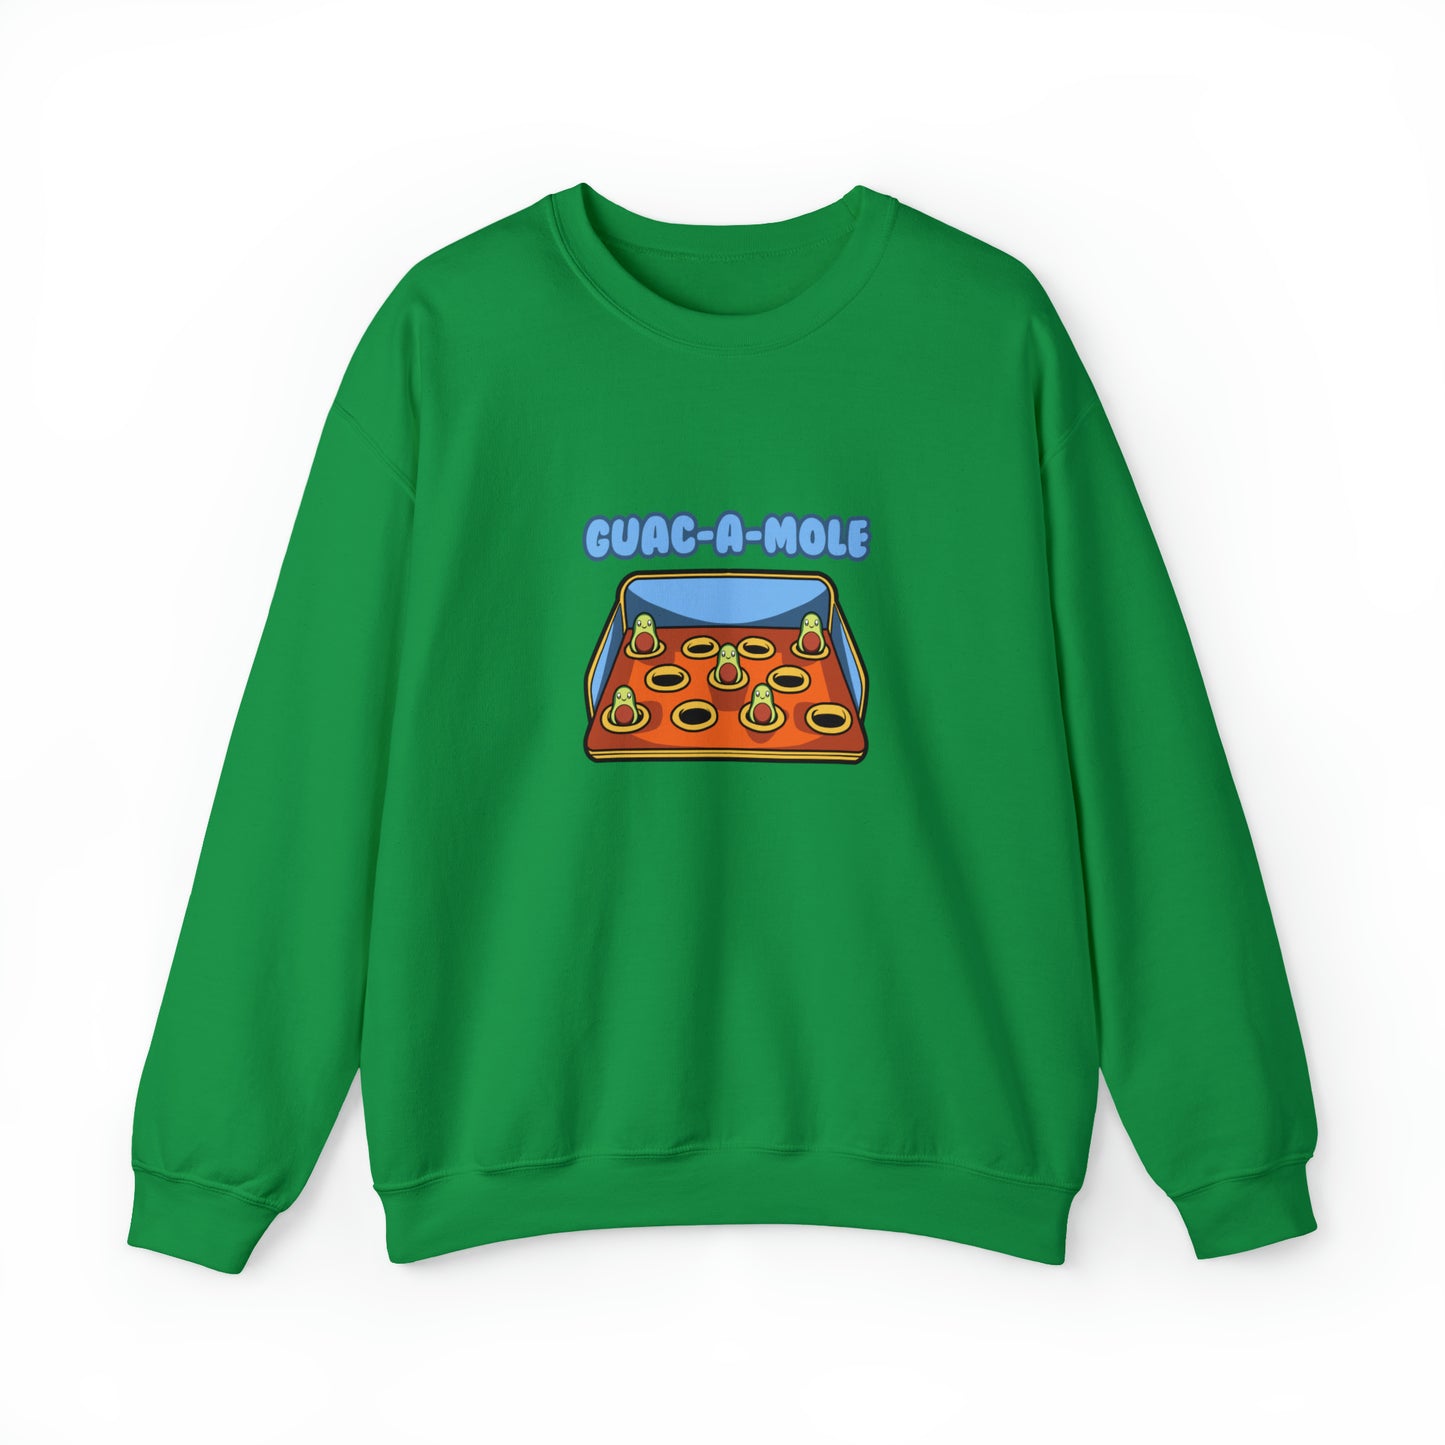 Custom Parody Crewneck Sweatshirt, Guac-a-mole Design